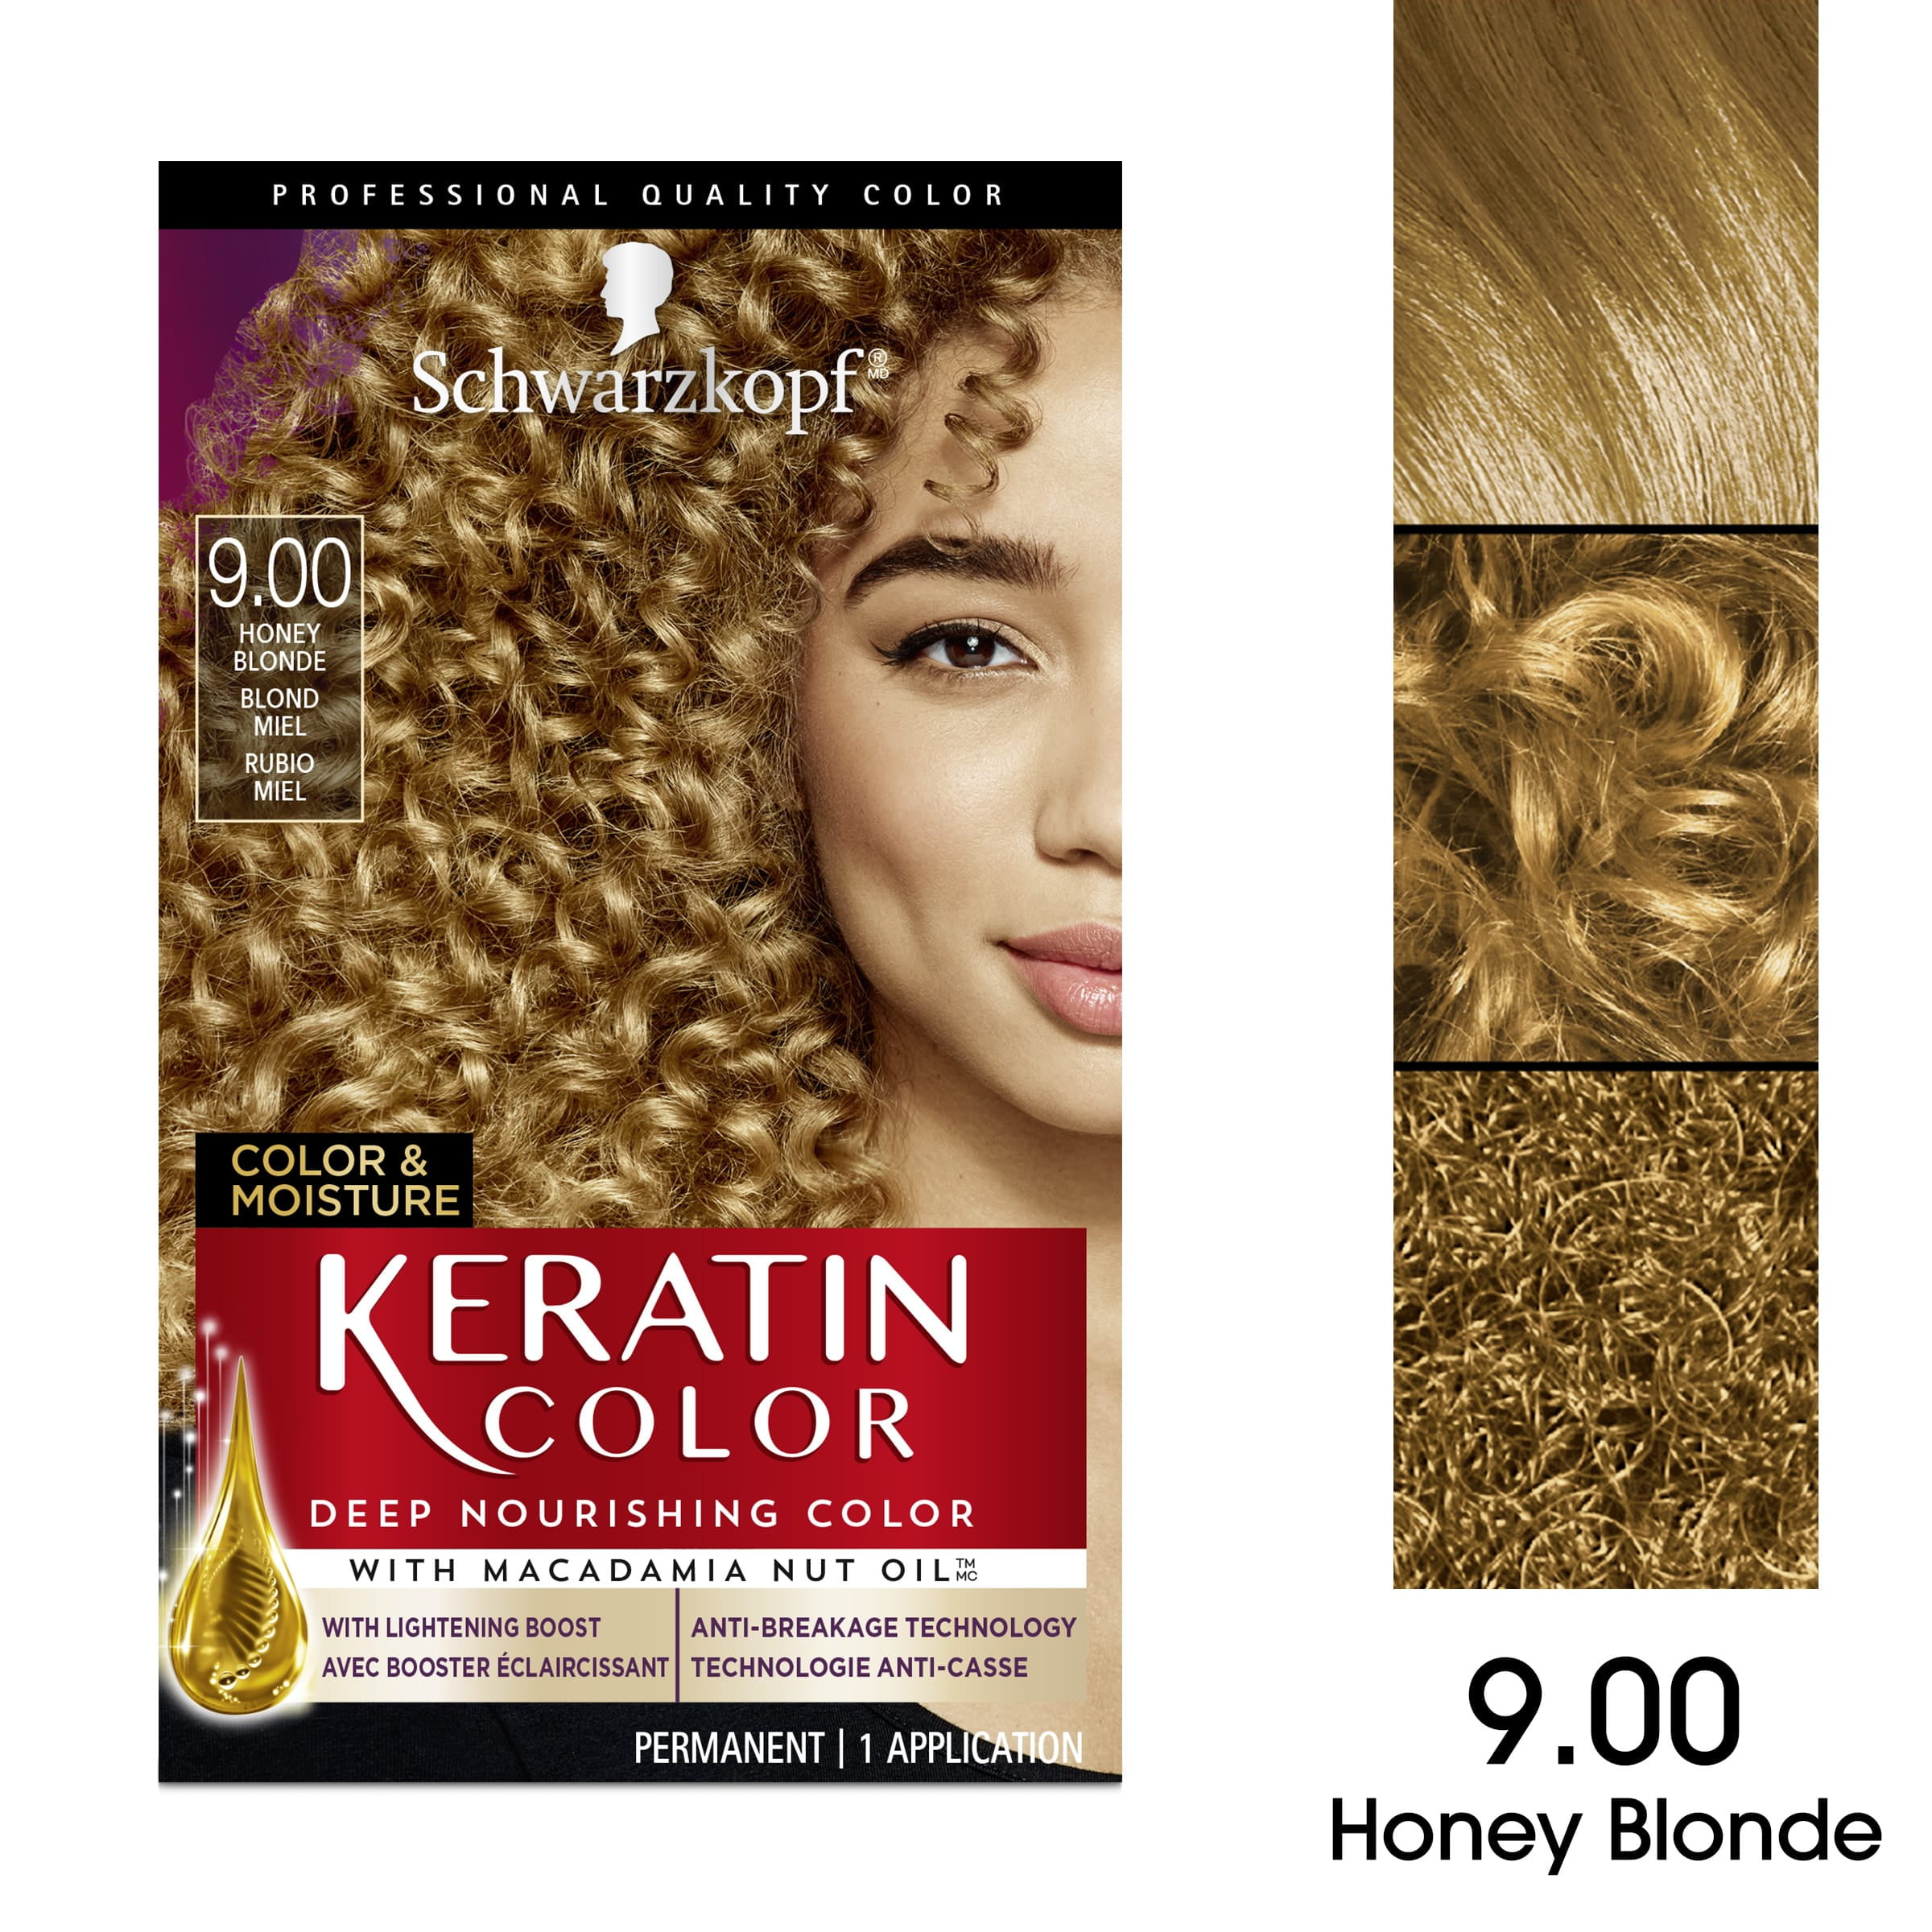 Schwarzkopf Keratin Color, Color & Moisture Permanent Hair Color Cream, 9.0 Honey Blonde